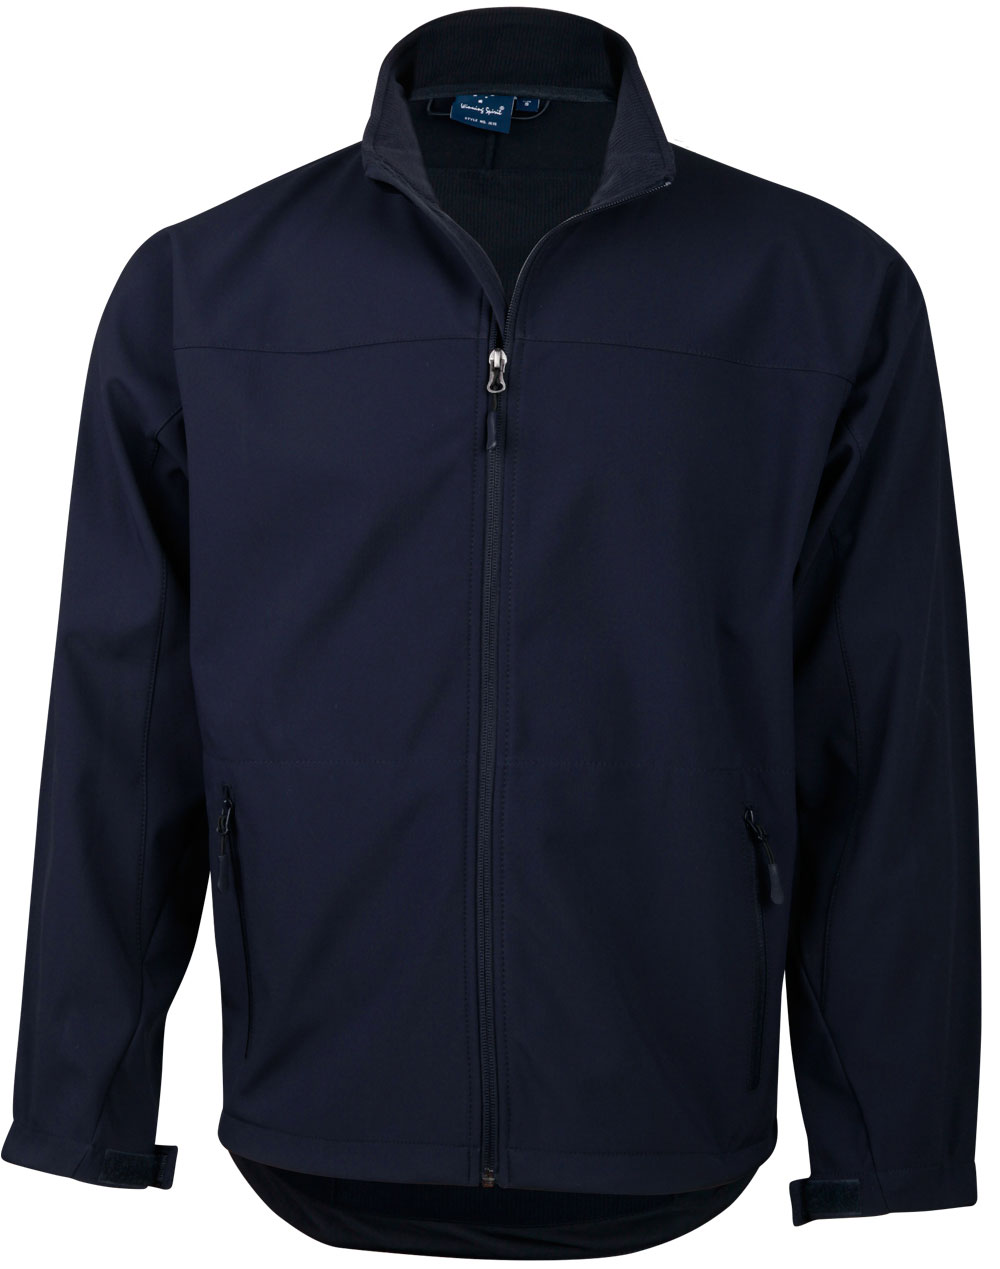 Men's and Women's Rosewall Soft Shell Jacket - Navy - Uniform Edit